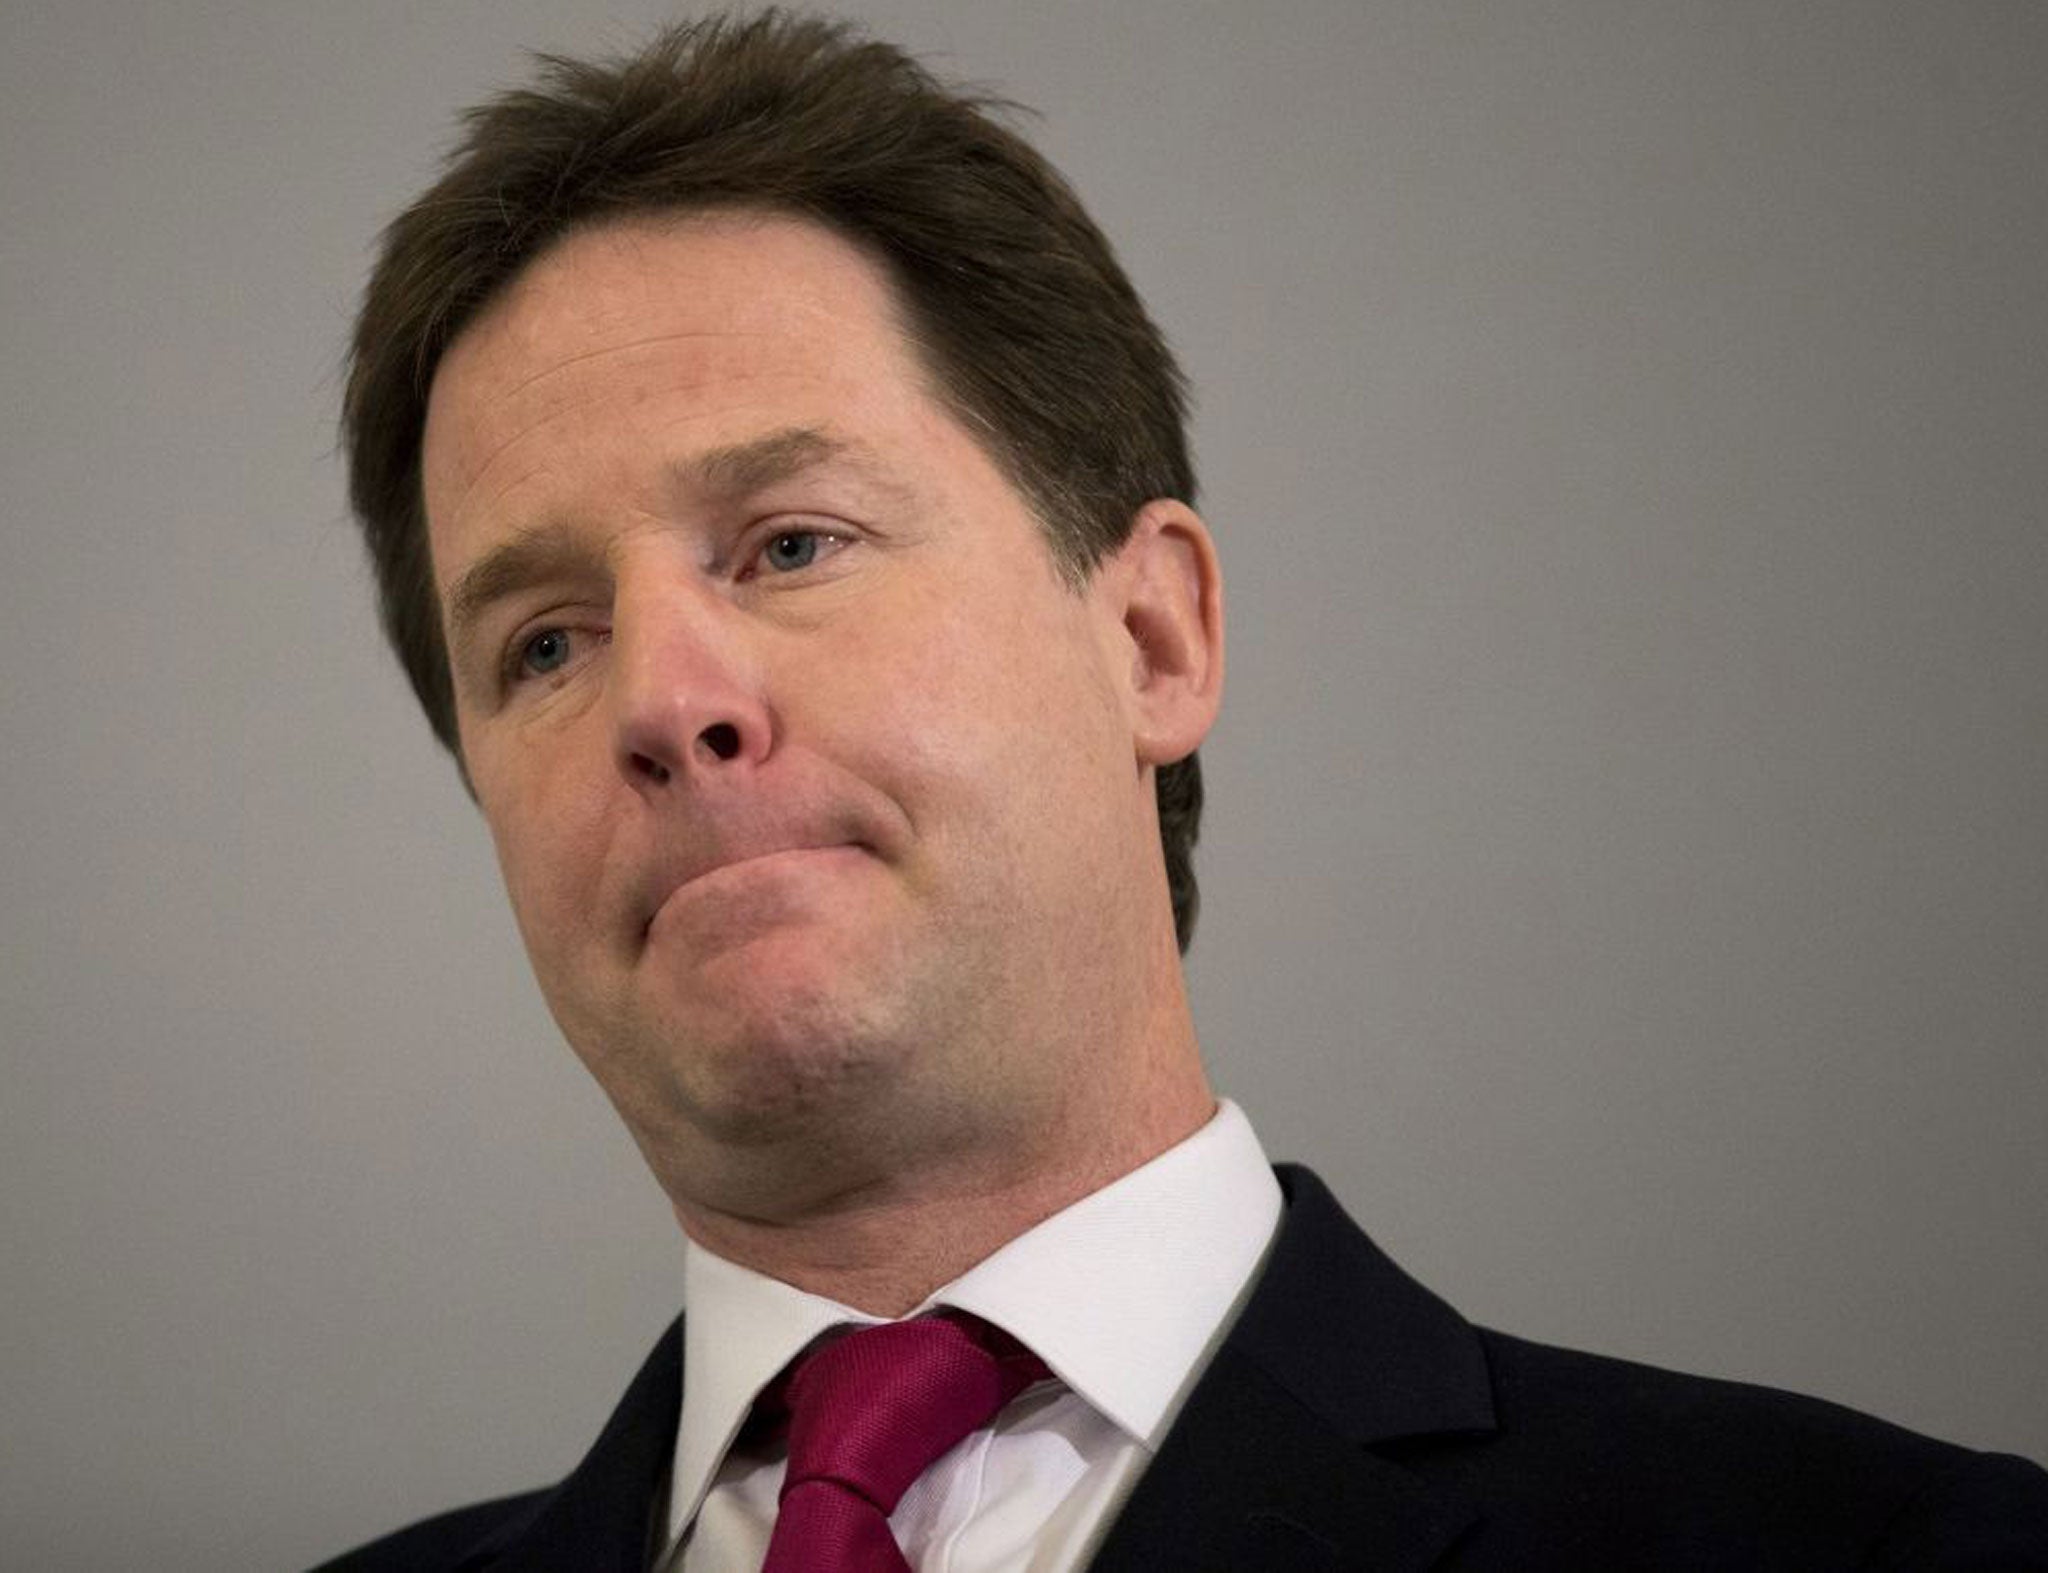 Nick Clegg’s ratings amongst Liberal Democrat activists have slumped